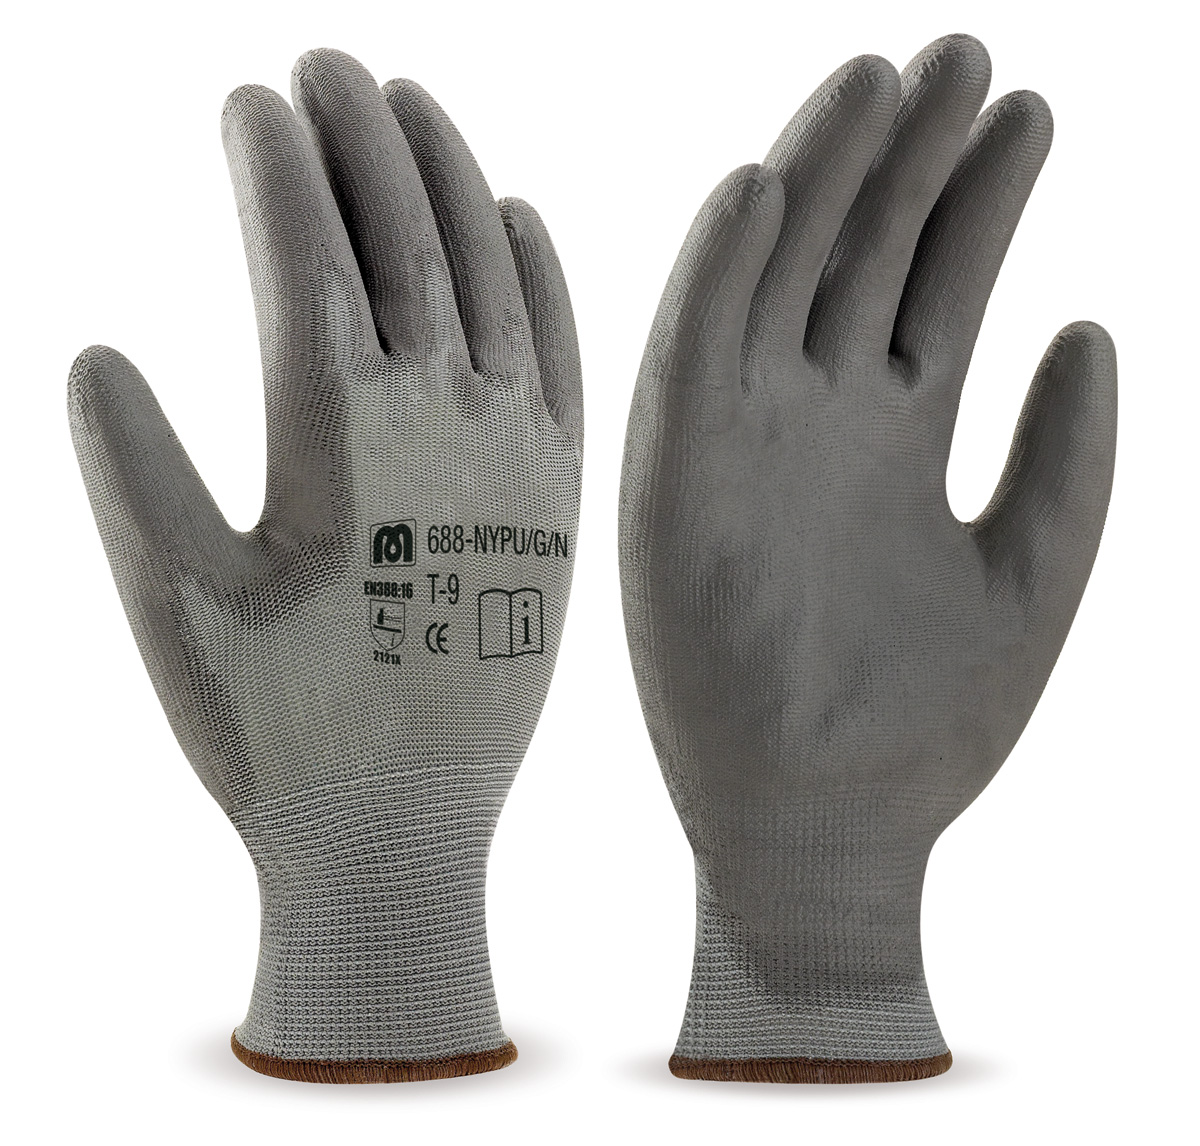 688-NYPU/G/N Work Gloves Nylon Grey polyester glove with grey polyurethane coating.